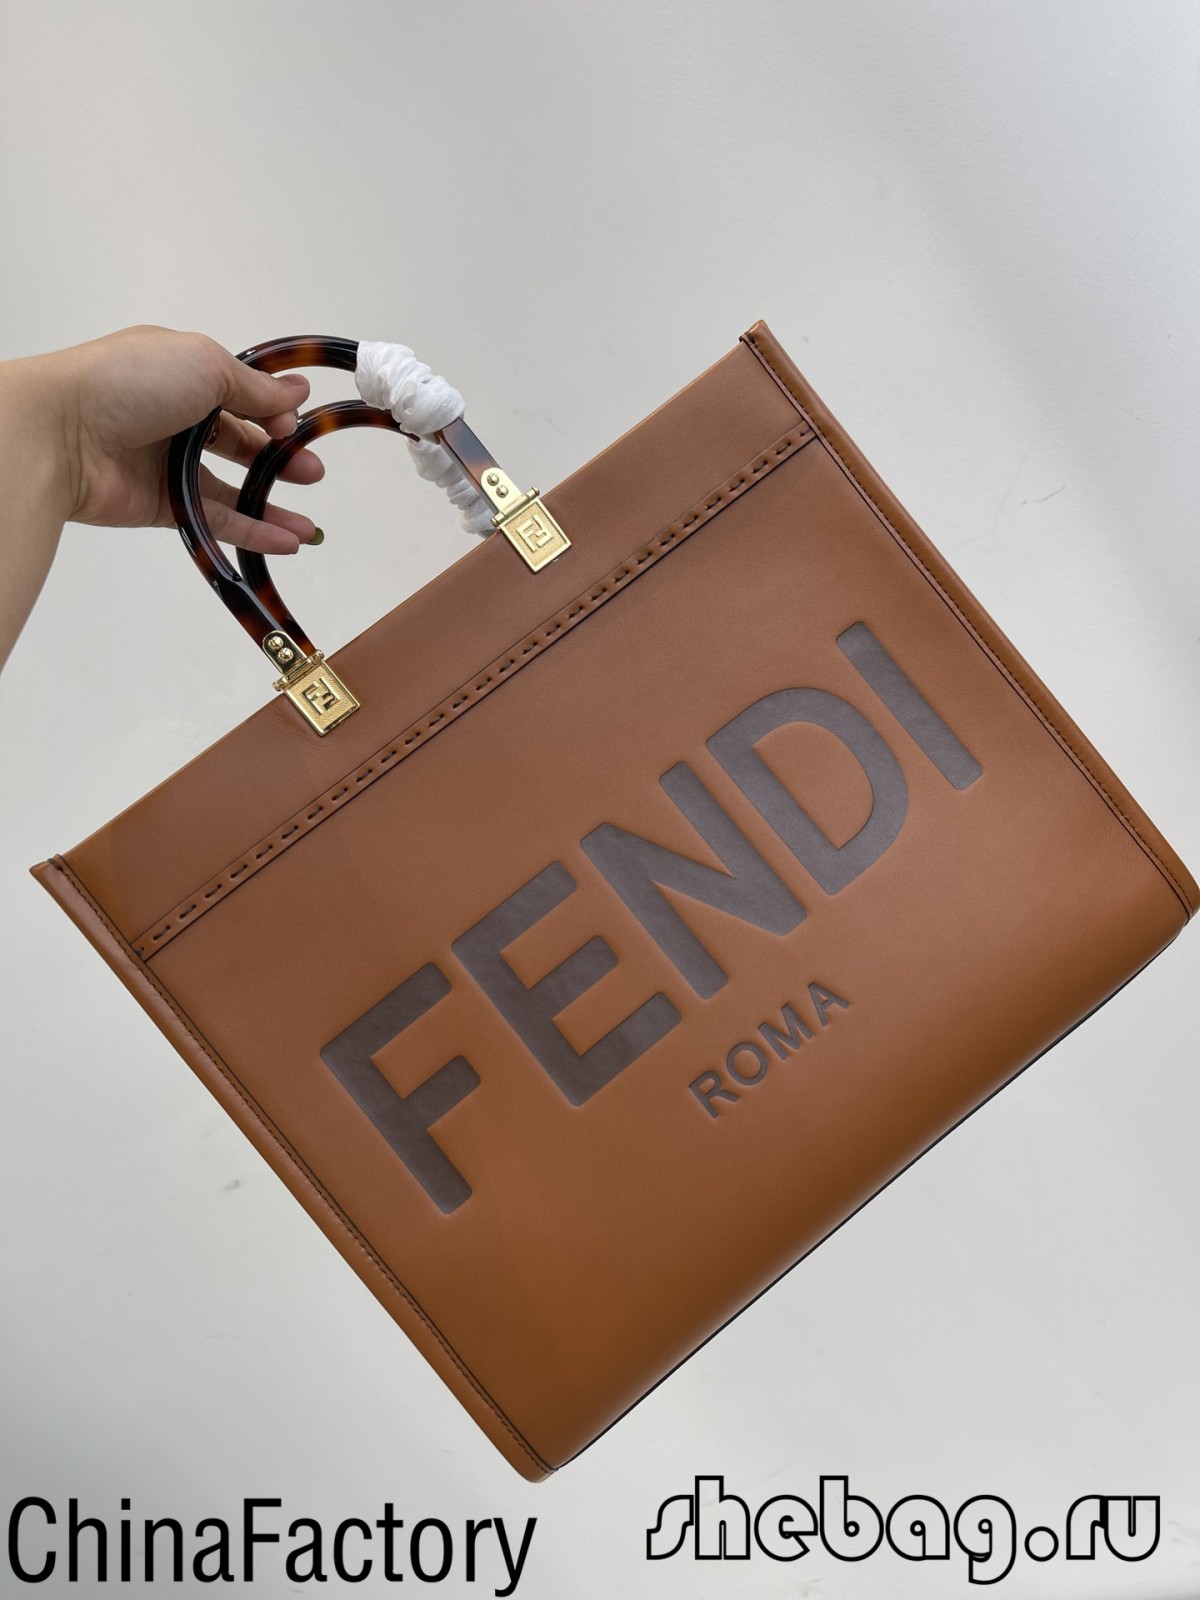 फेंडी टोट बैग प्रतिकृति ऑनलाइन विक्रेता तुलना करते हैं: फेंडी सनशाइन (2022 हॉटेस्ट) - सर्वश्रेष्ठ गुणवत्ता नकली लुई वीटन बैग ऑनलाइन स्टोर, प्रतिकृति डिजाइनर बैग आरयू